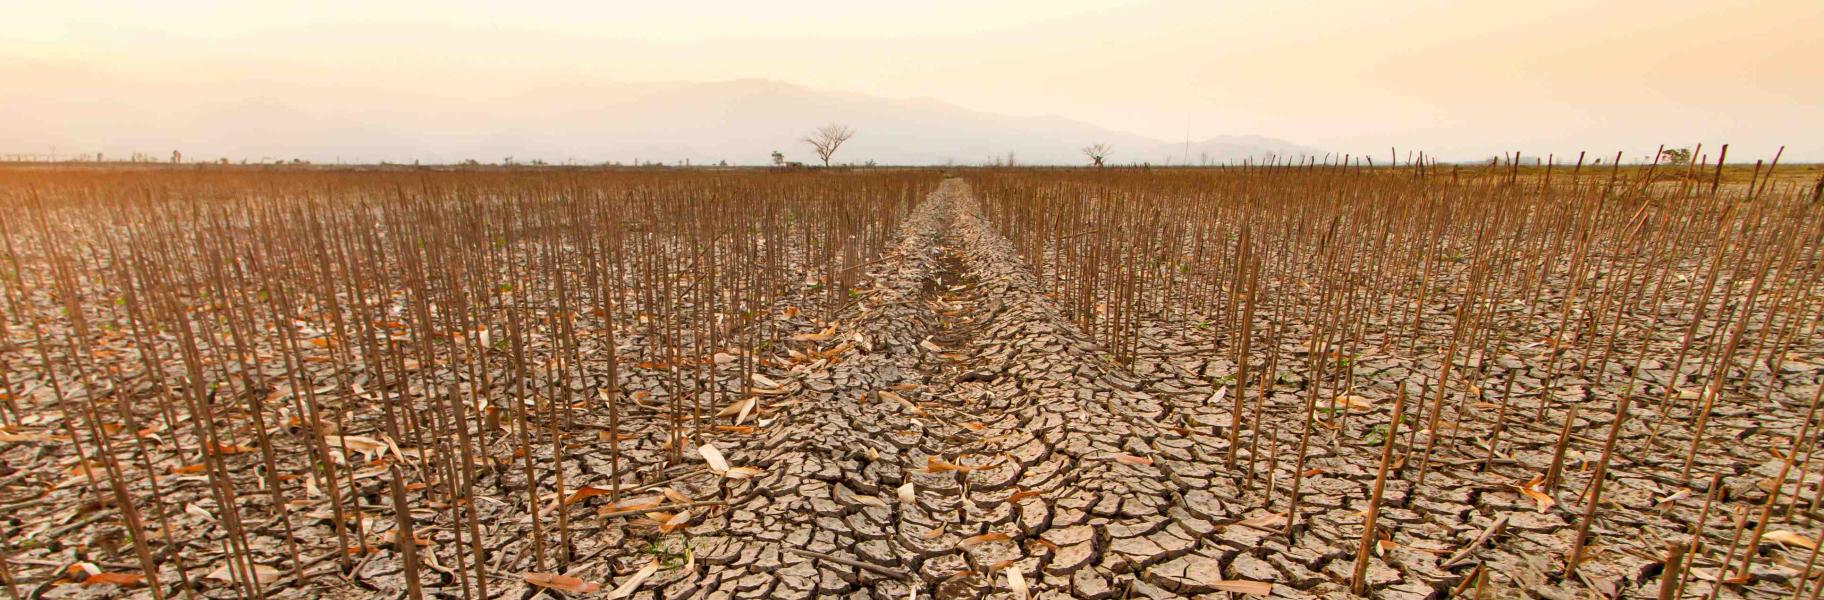 drought desertification